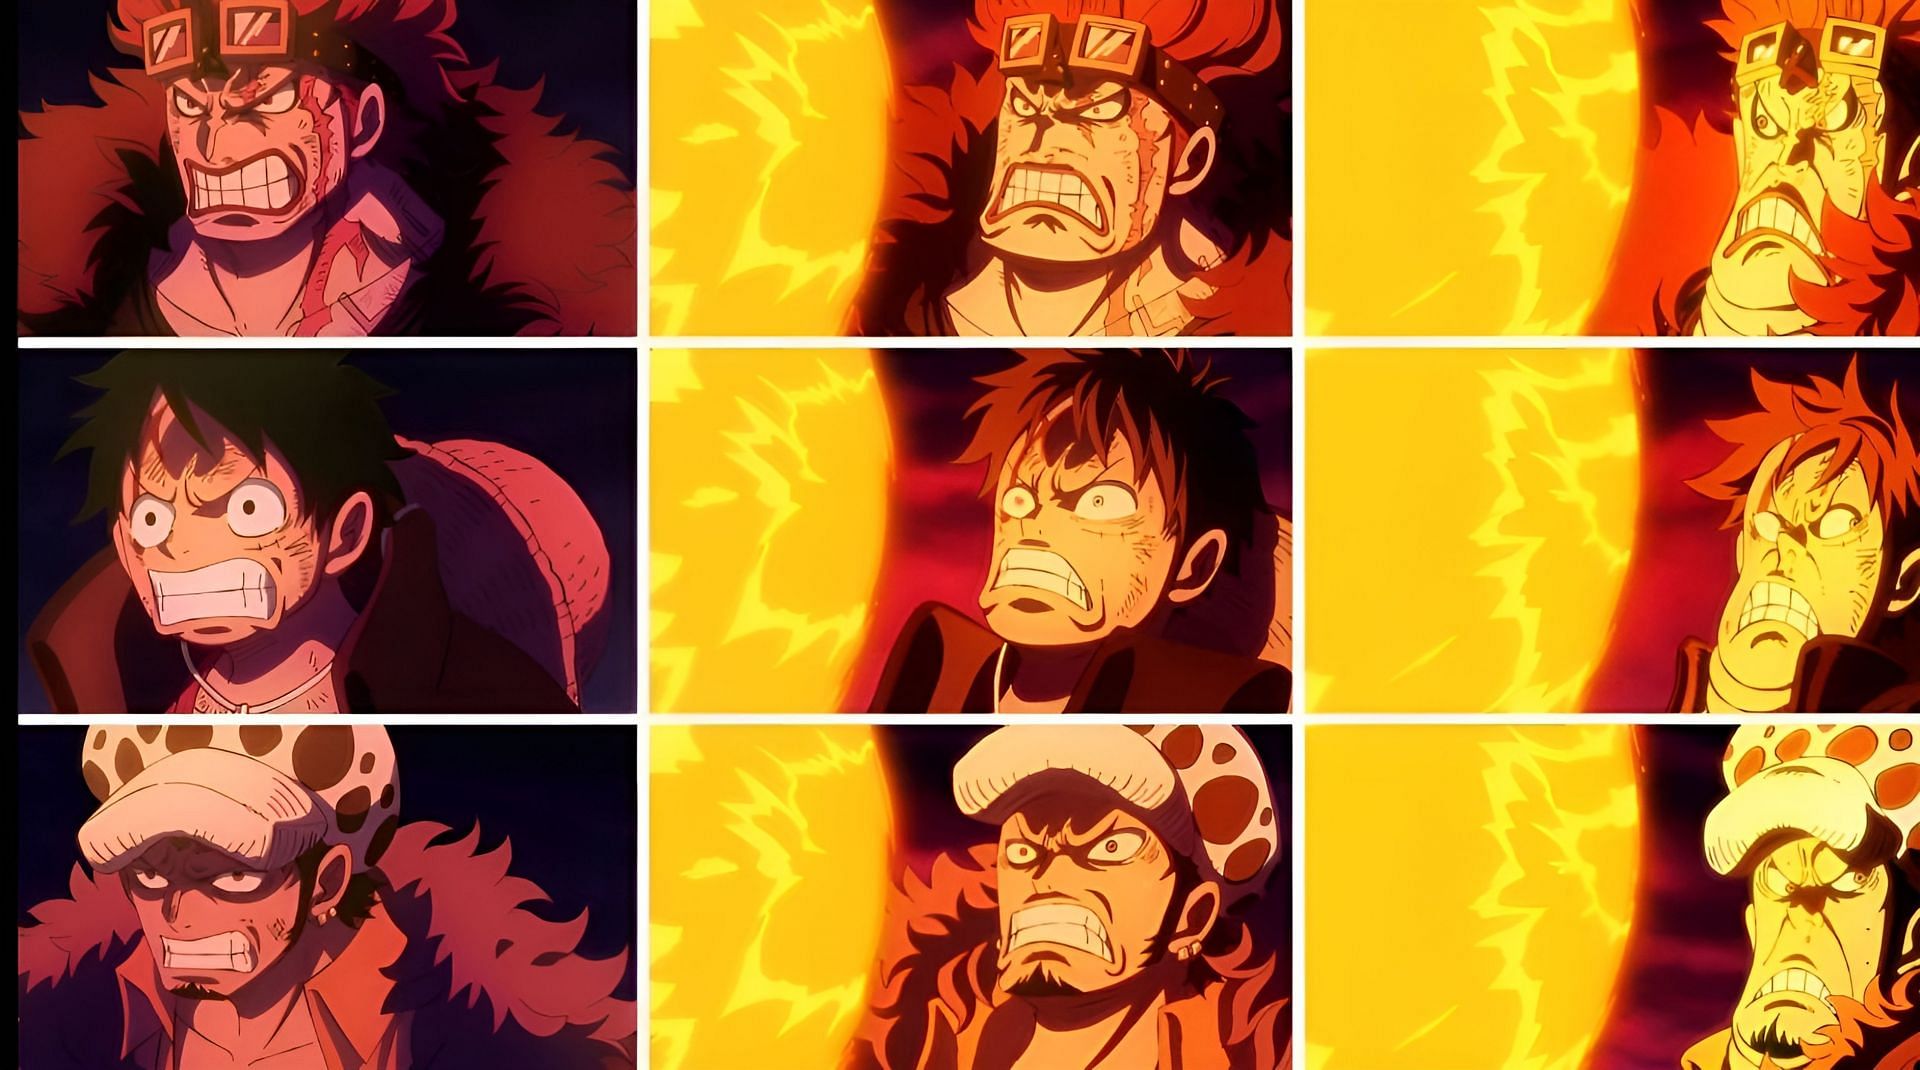 Kidd, Luffy, and Law in One Piece episode 1015 (Image Credits: Eiichiro Oda/Shueisha, Viz Media, One Piece)